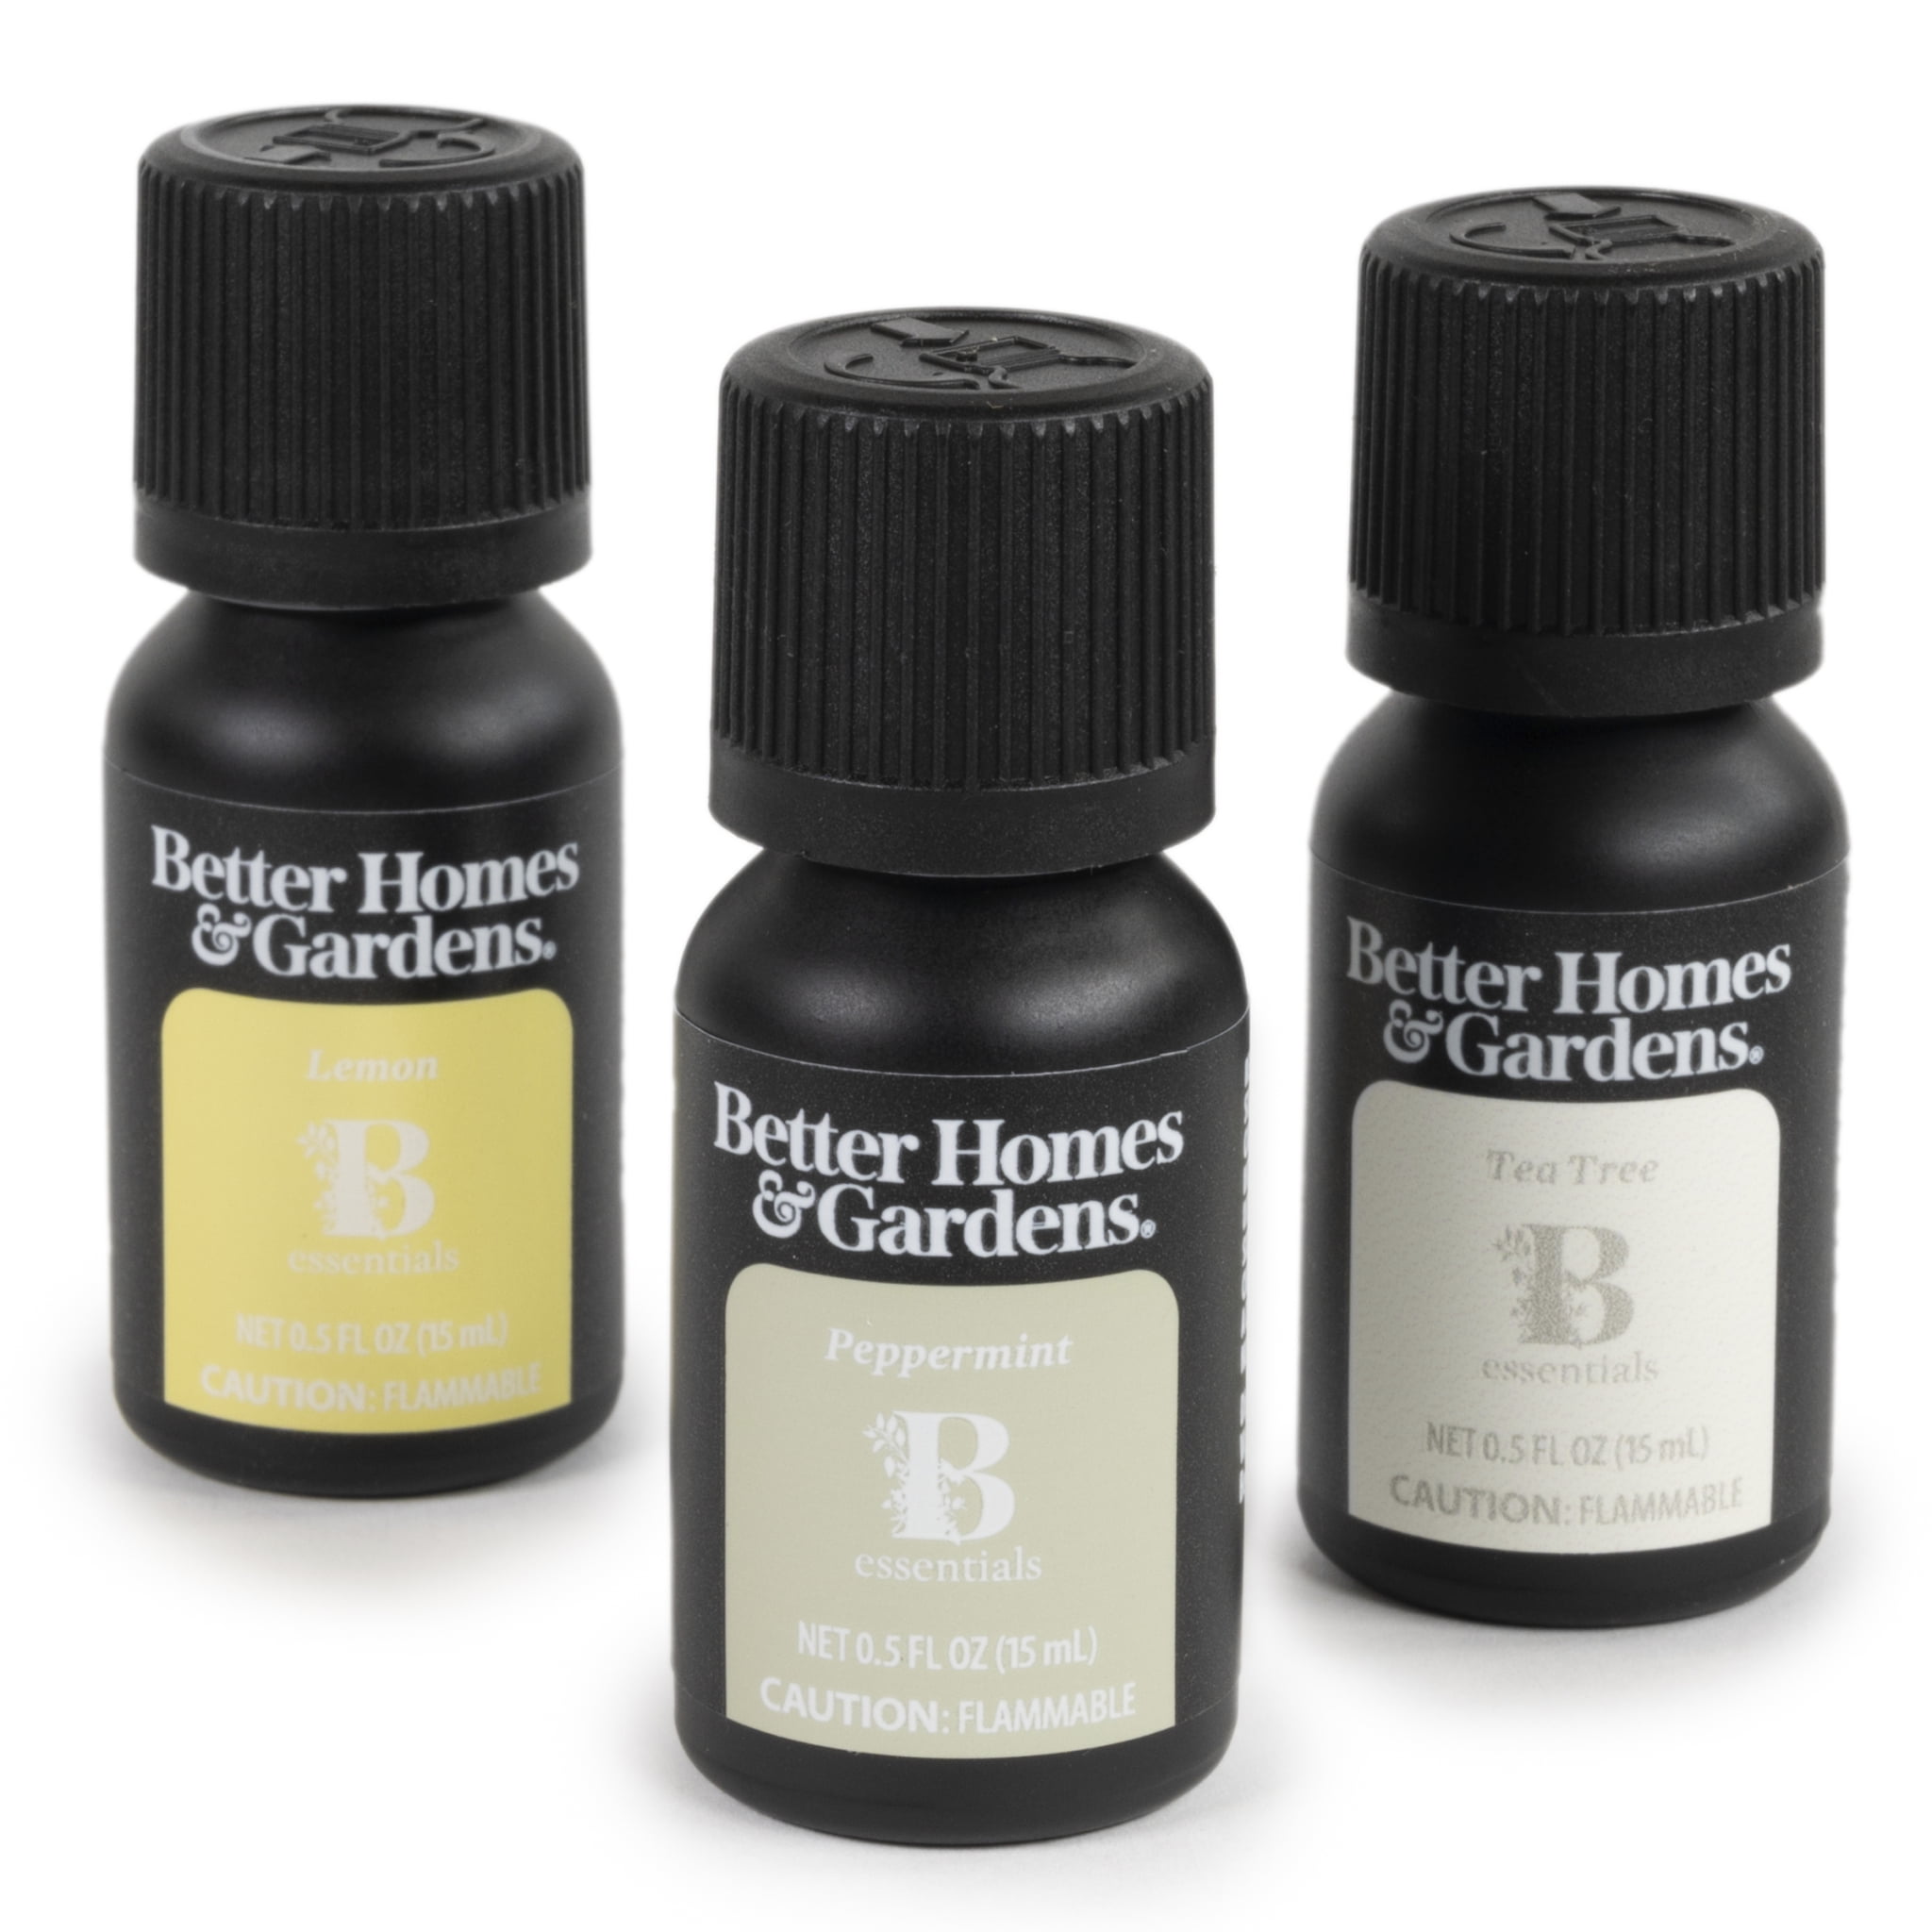 Better Homes & Gardens 100% Pure Essential Oils: Lemon, Peppermint, & Tea Tree, 3 x 15mL